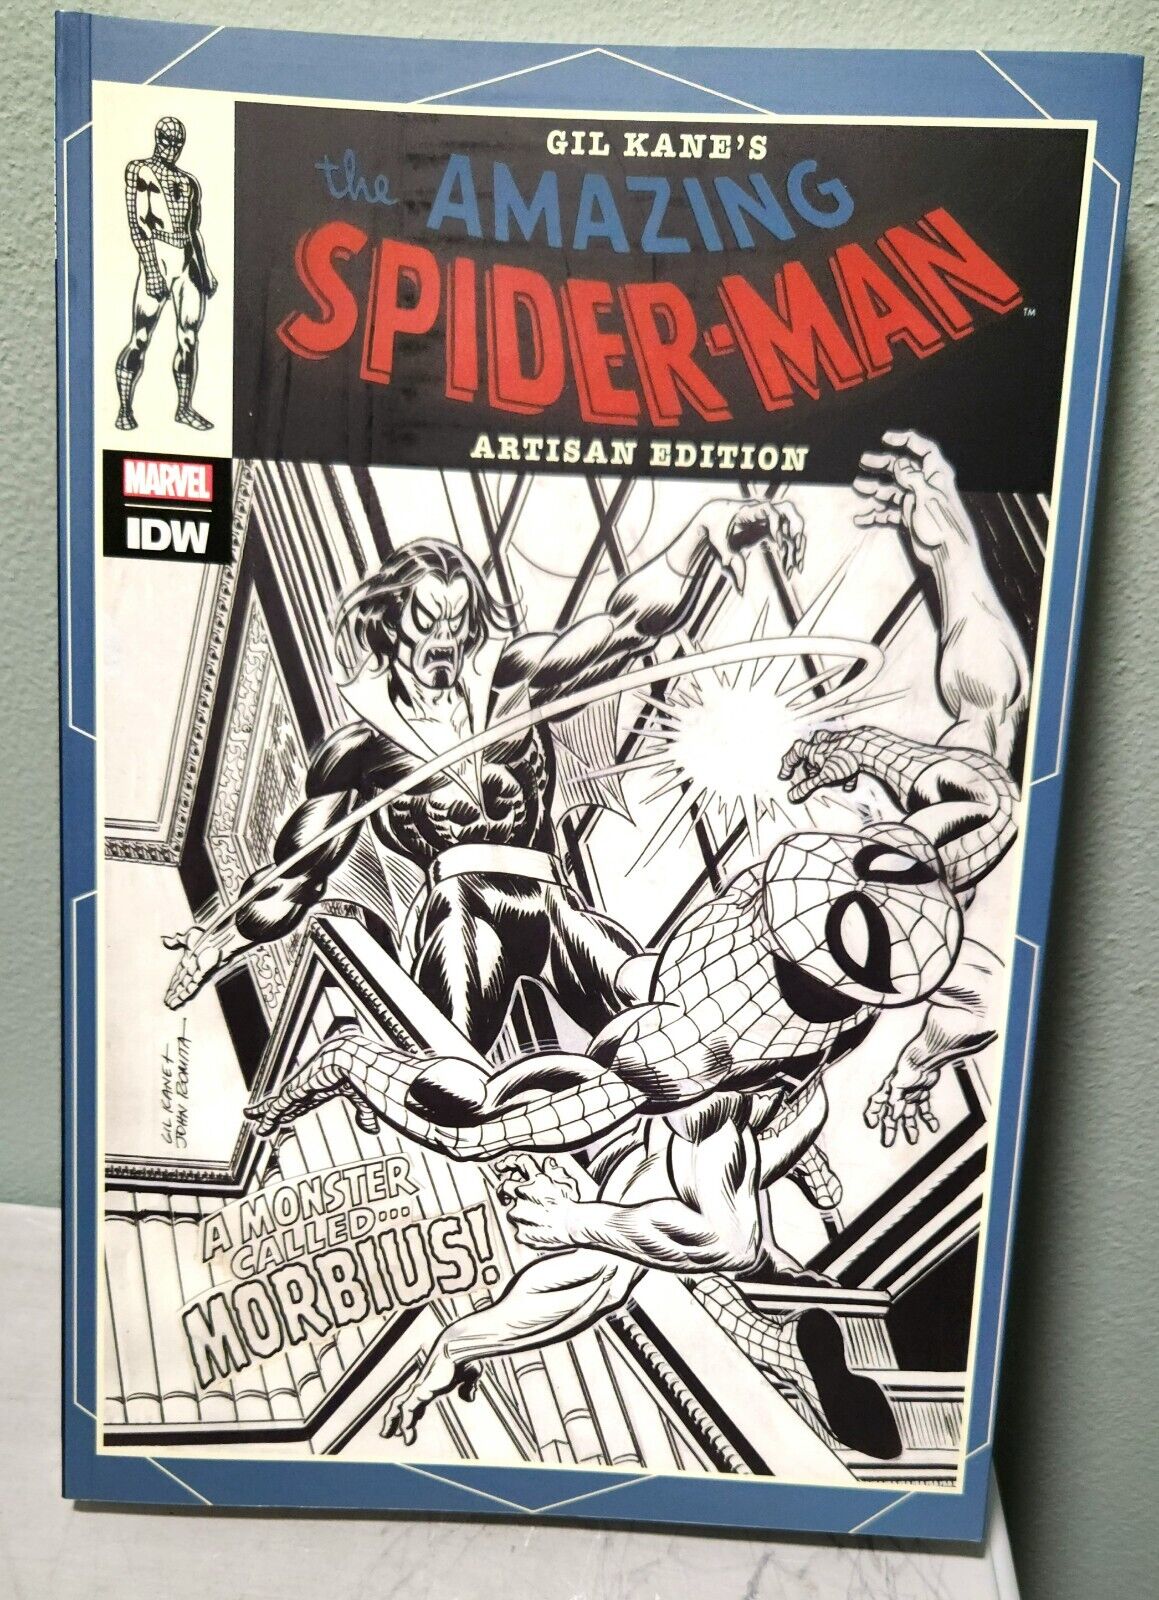 GIL KANE'S AMAZING SPIDER-MAN ARTISAN EDITION GRAPHIC NOVEL IDW Comics TPB NEW